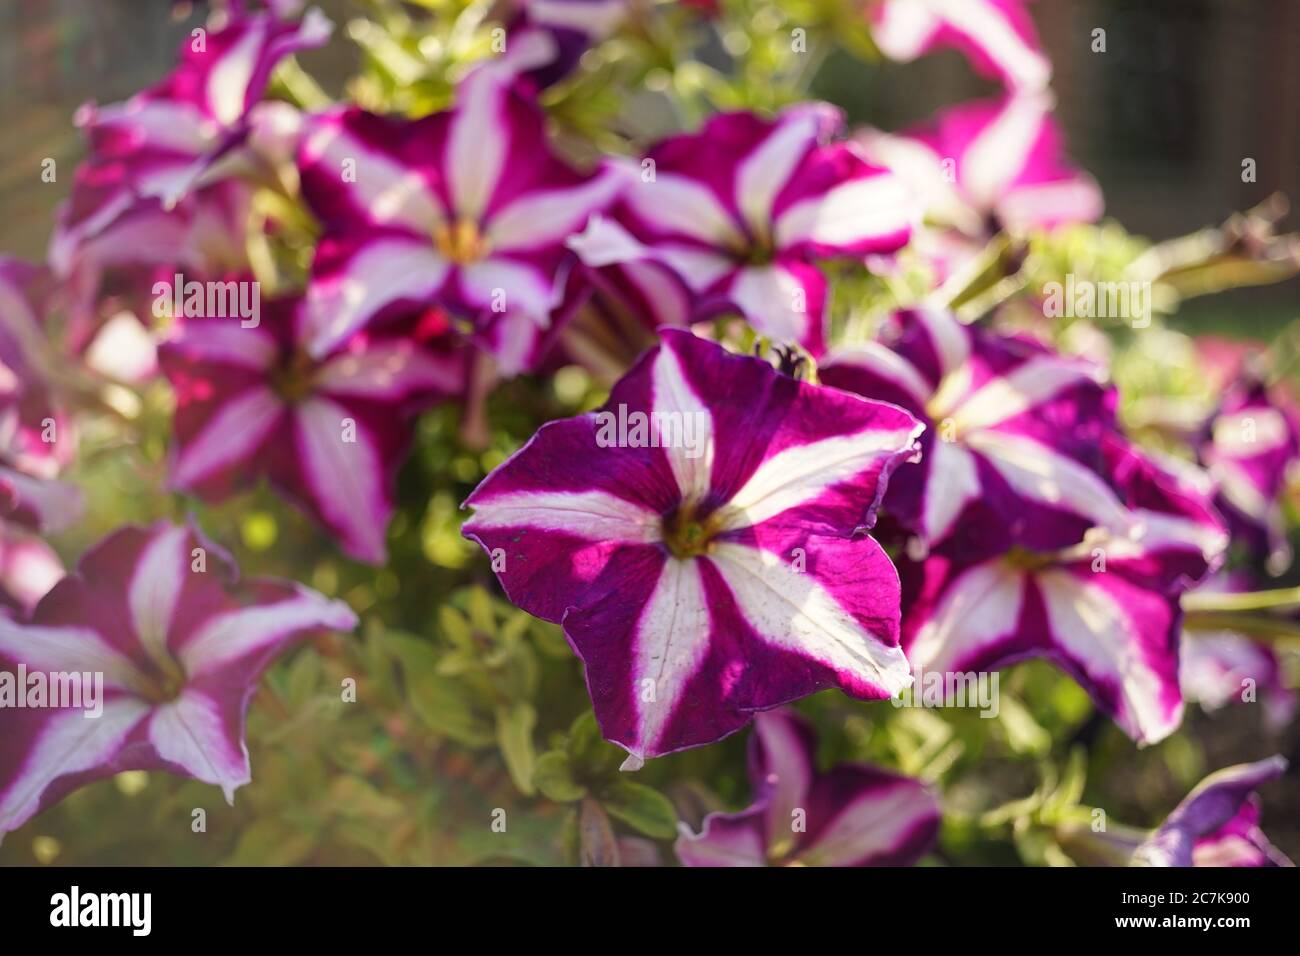 Purple White Petunia Flowers Bush Grow In A Summer Garden Stock Photo Alamy